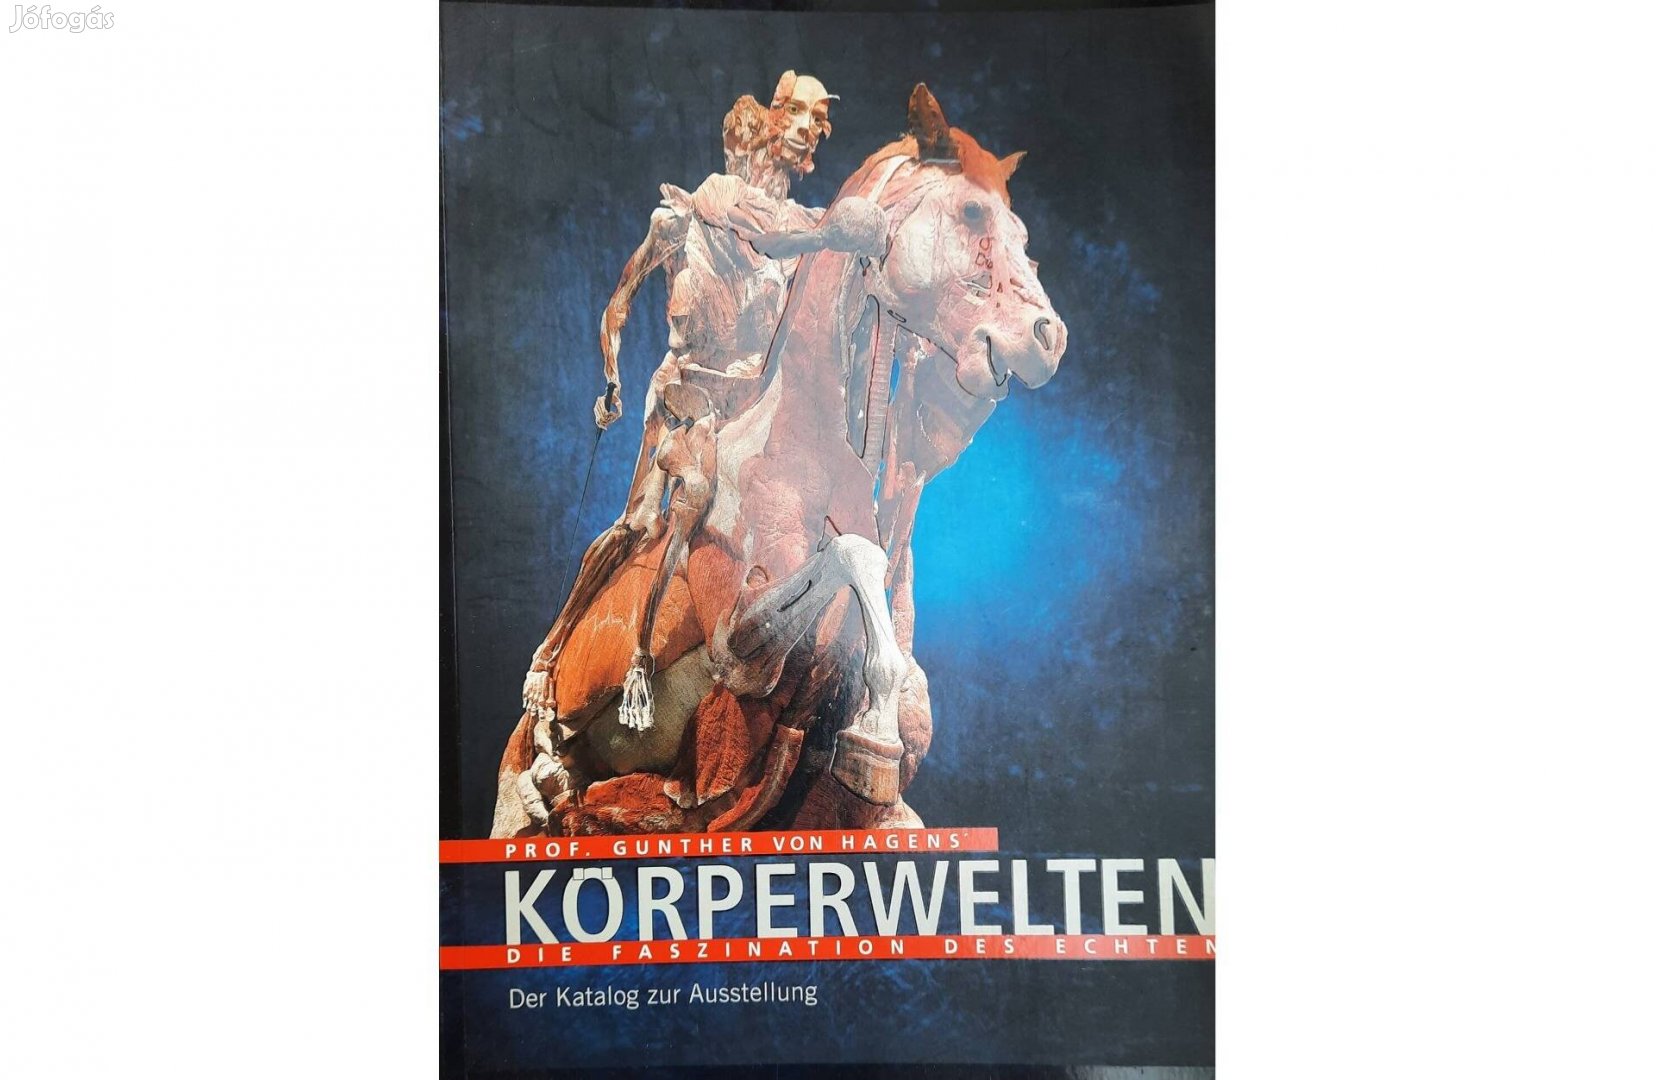 Gunther von Hagens: Körperwelten című könyv eladó